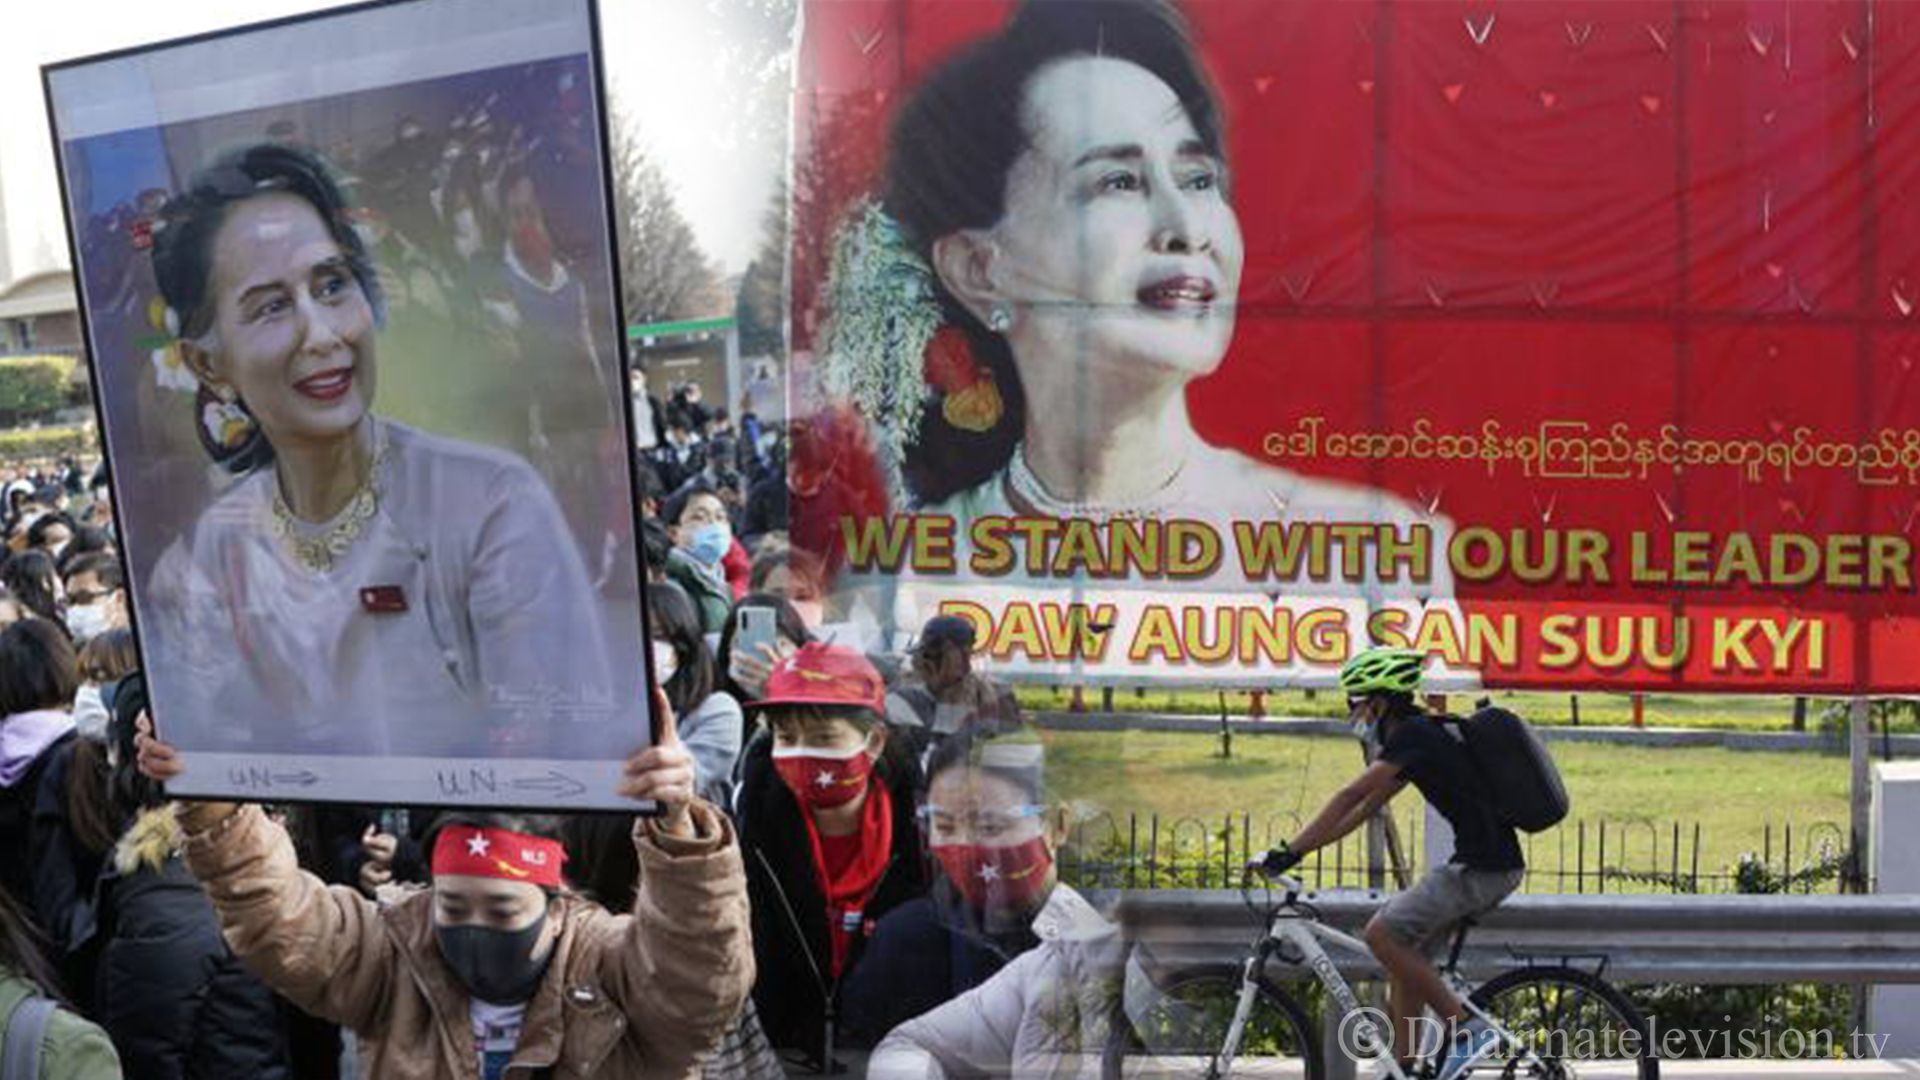 Leader Aung San Suu Kyi's party demands her release : Myanmar